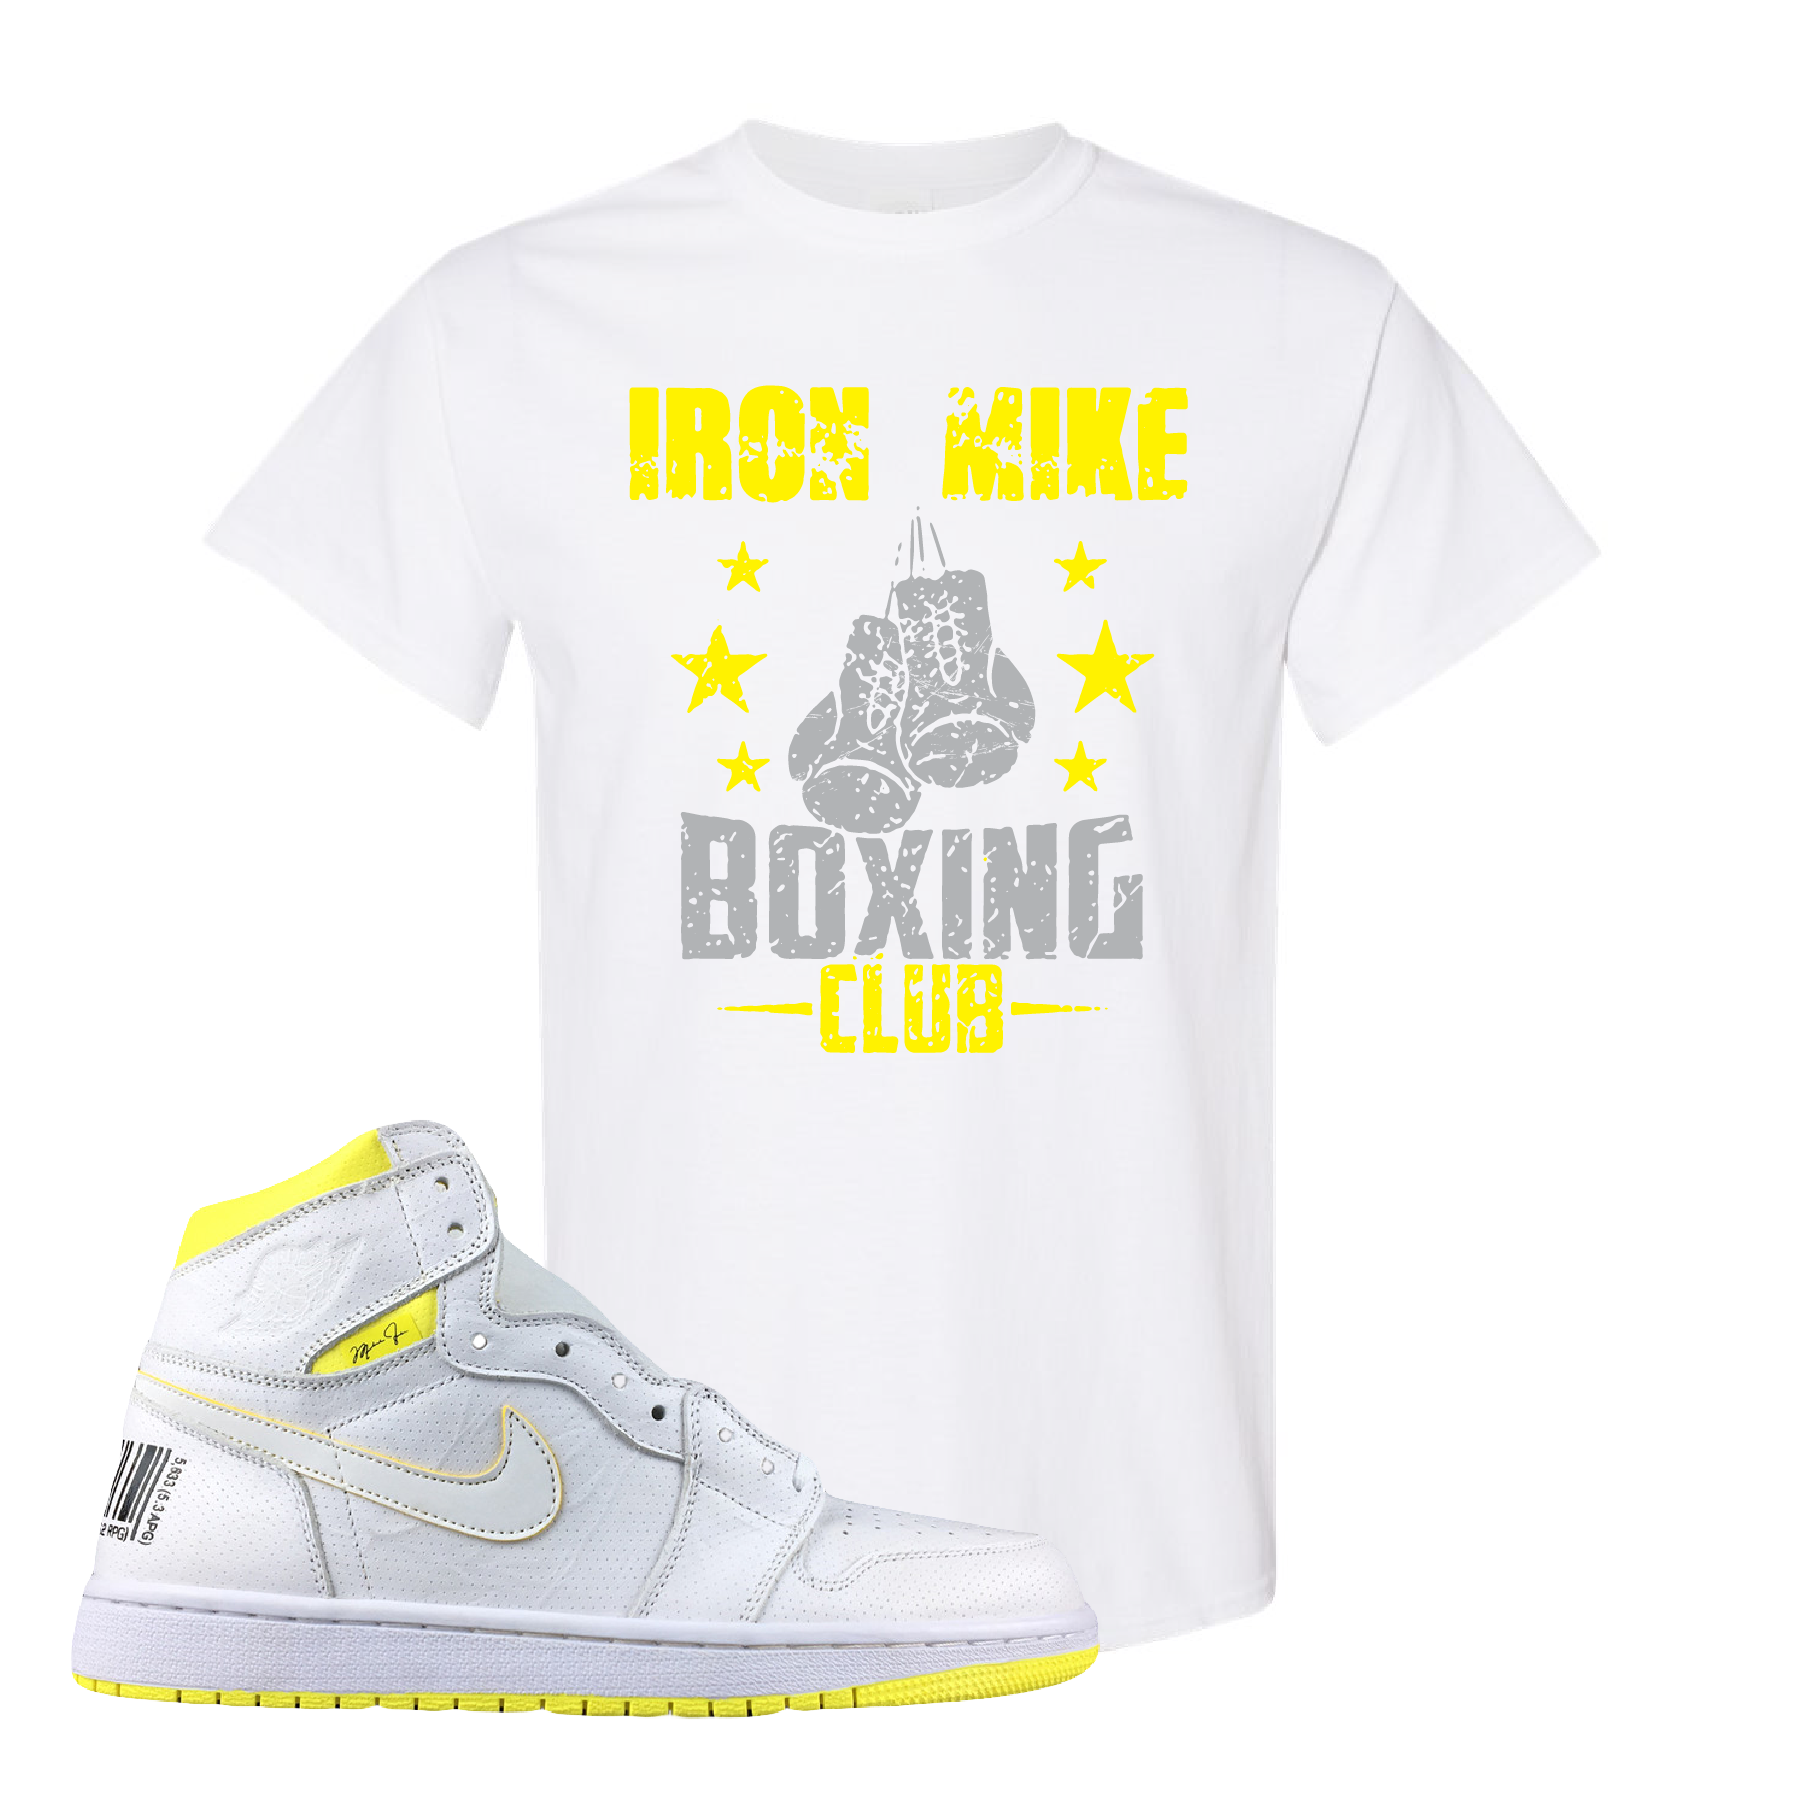 Jordan 1 First Class Flight Iron Mike Boxing Club White Sneaker Matching T-Shirt